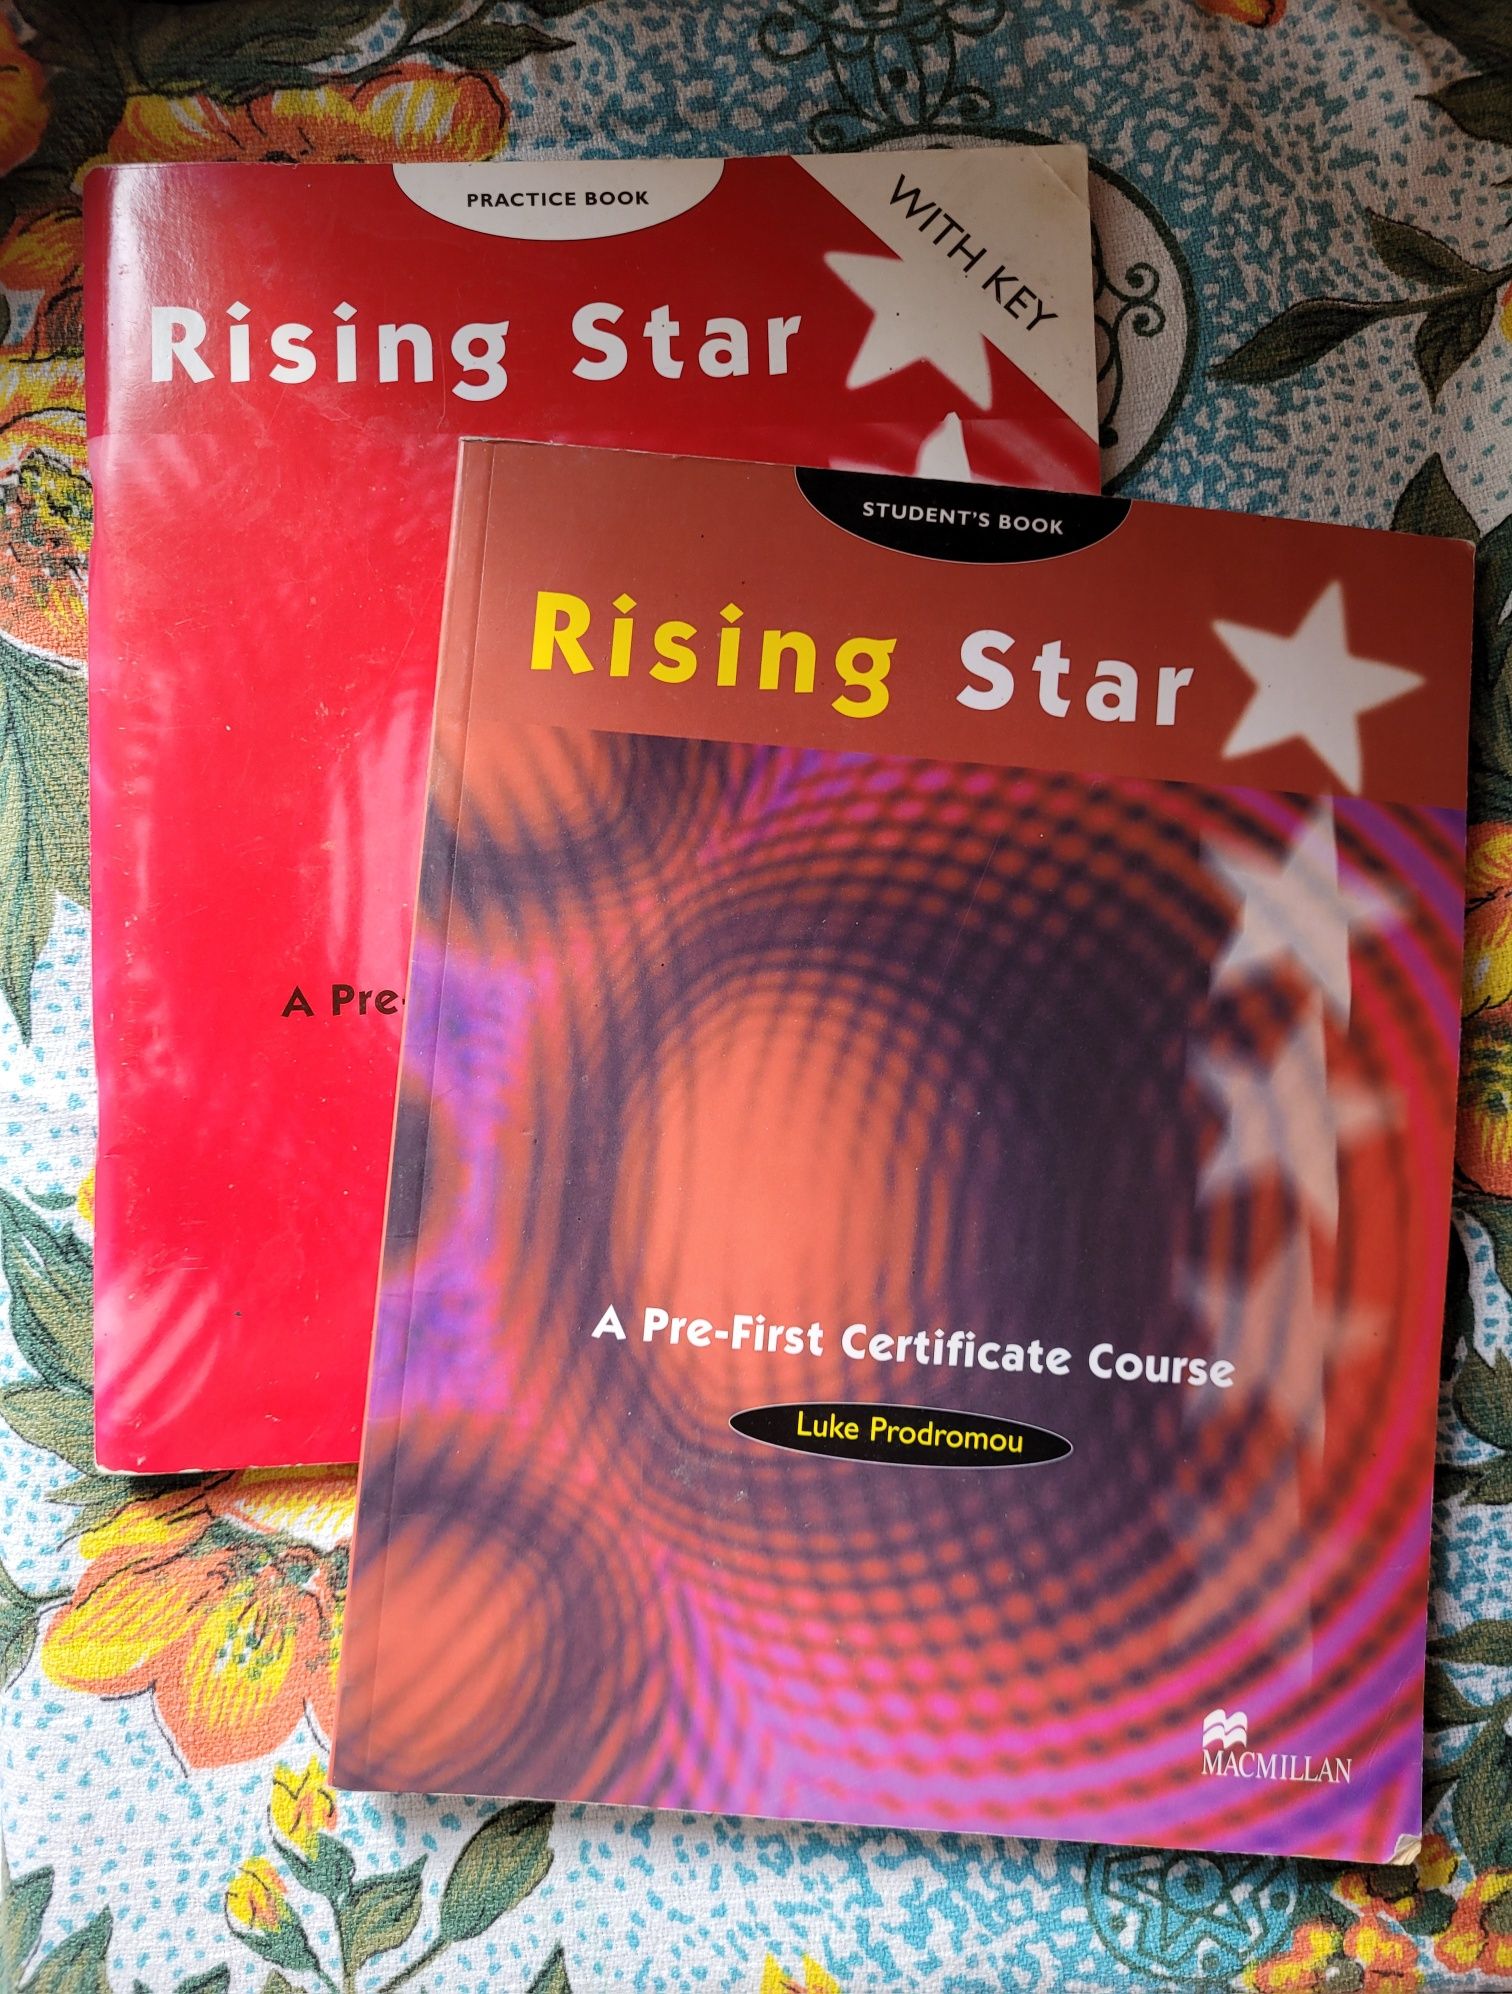 Учебники английского Headway, Wavelength, Rising Star +